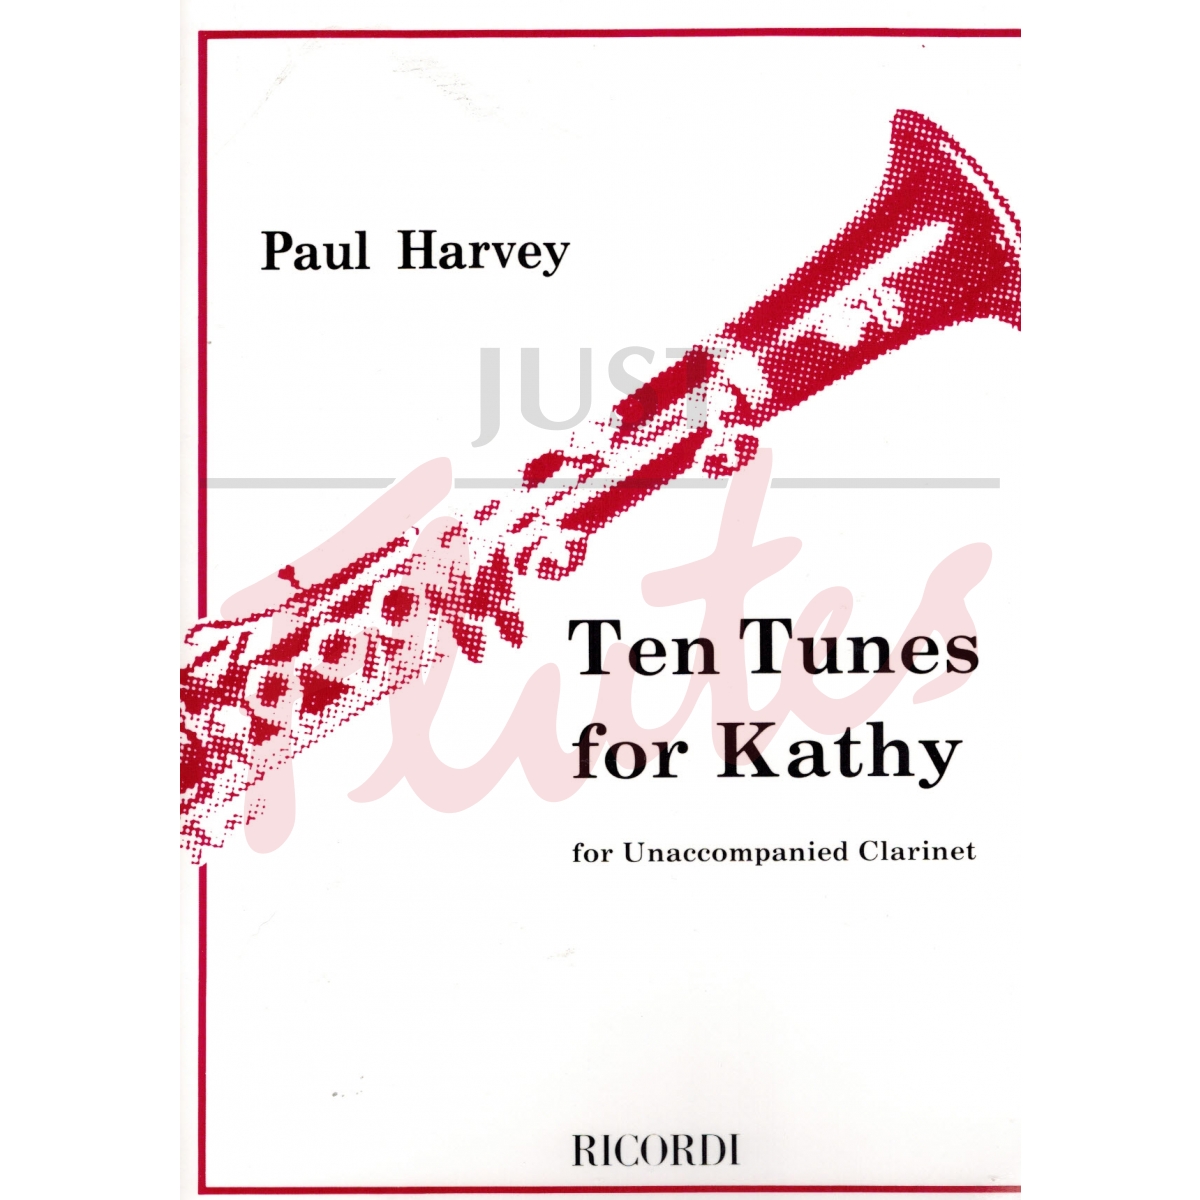 Ten Tunes for Kathy